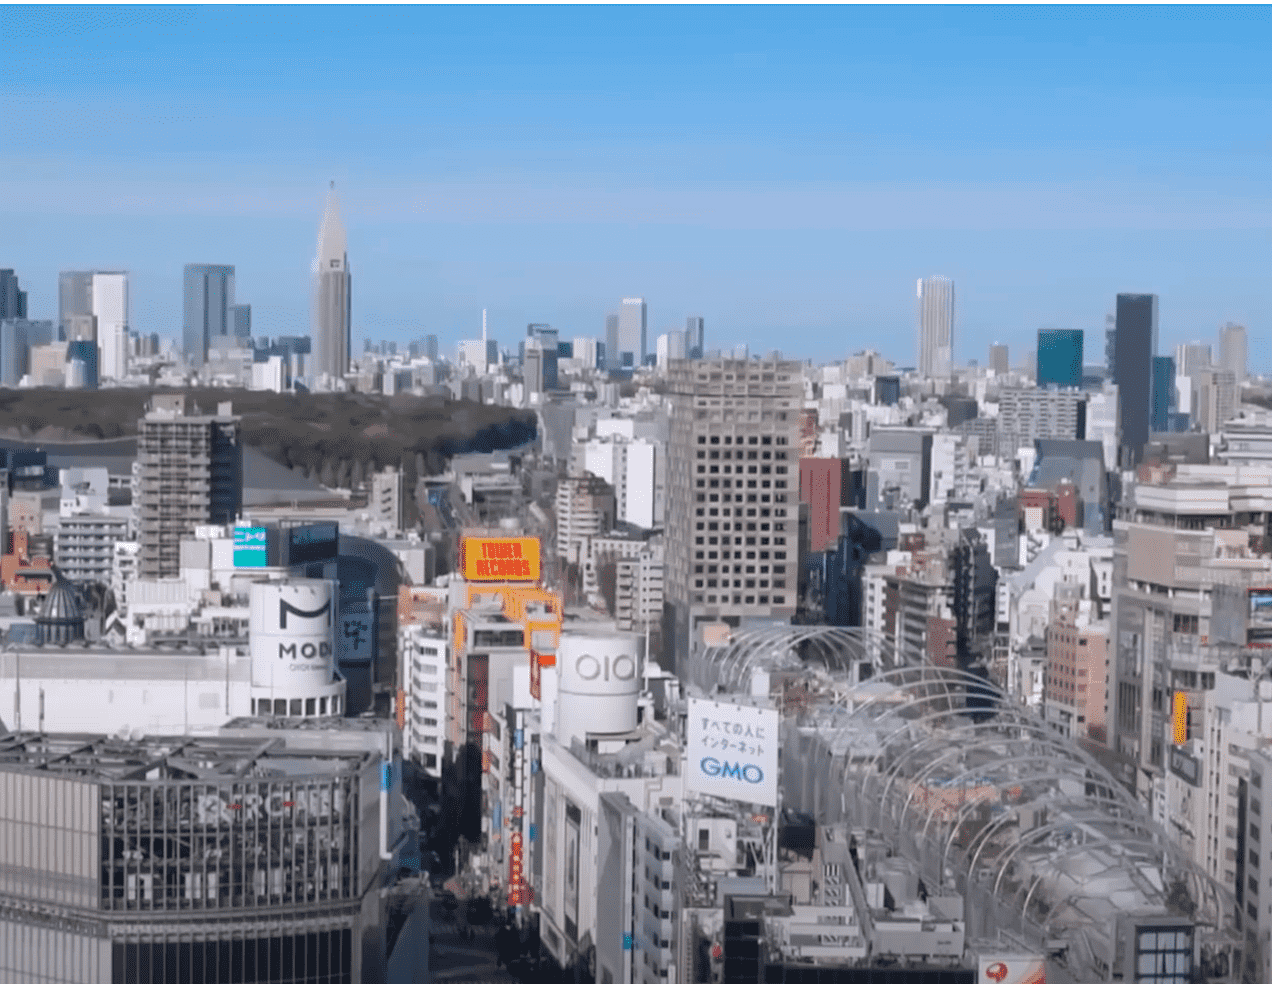 Tokyo's Urban Culture of tomorrow